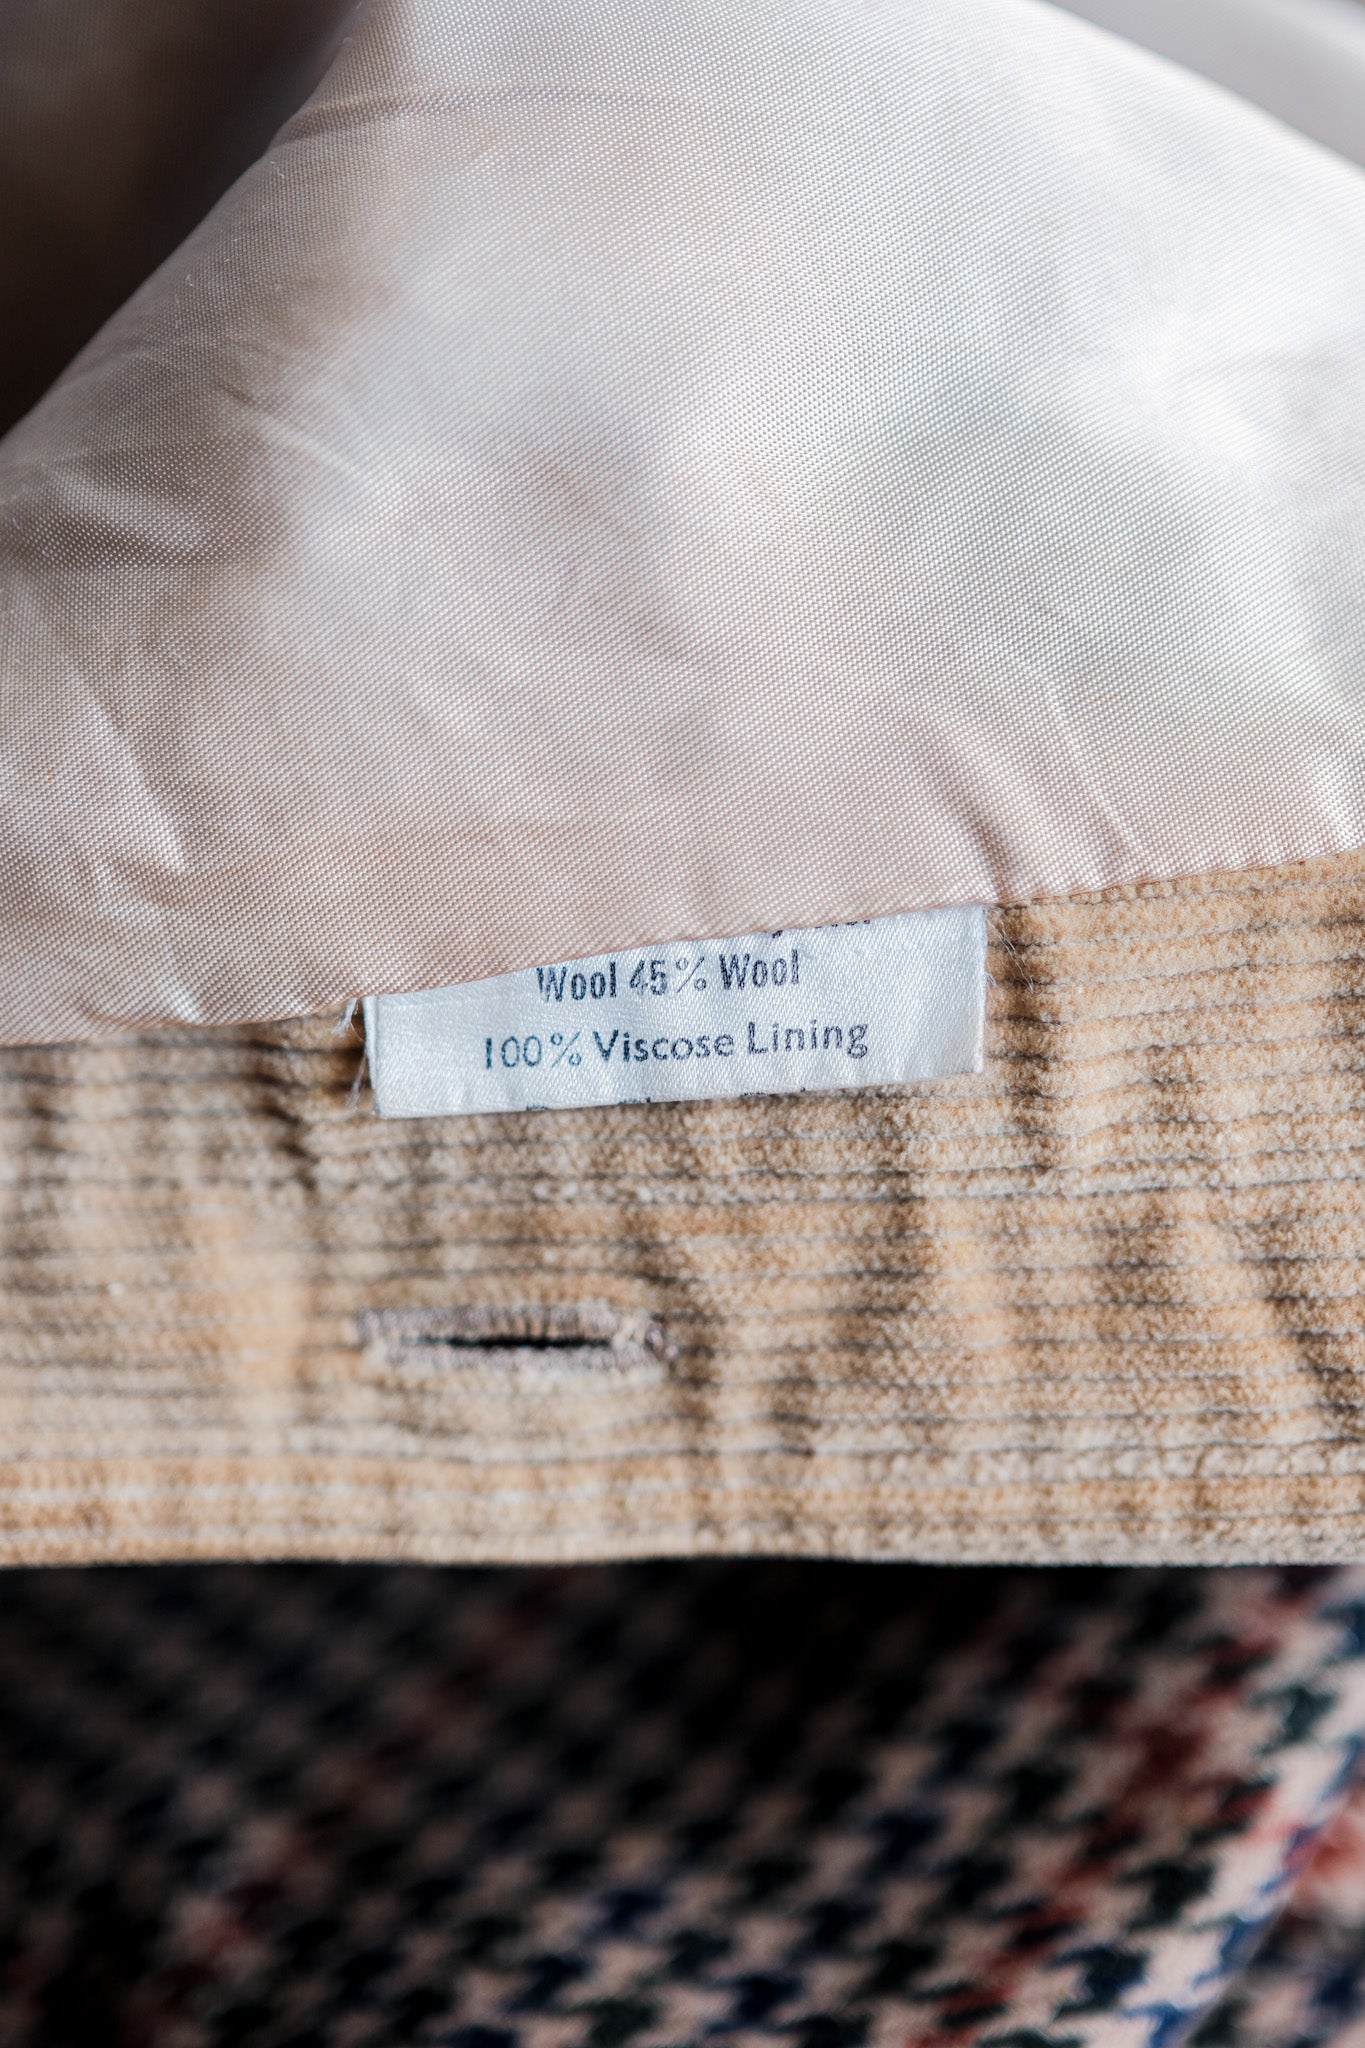 【~70's】British Vintage Houndstooth Wool Mix Jacket Size.38R "JAEGER"